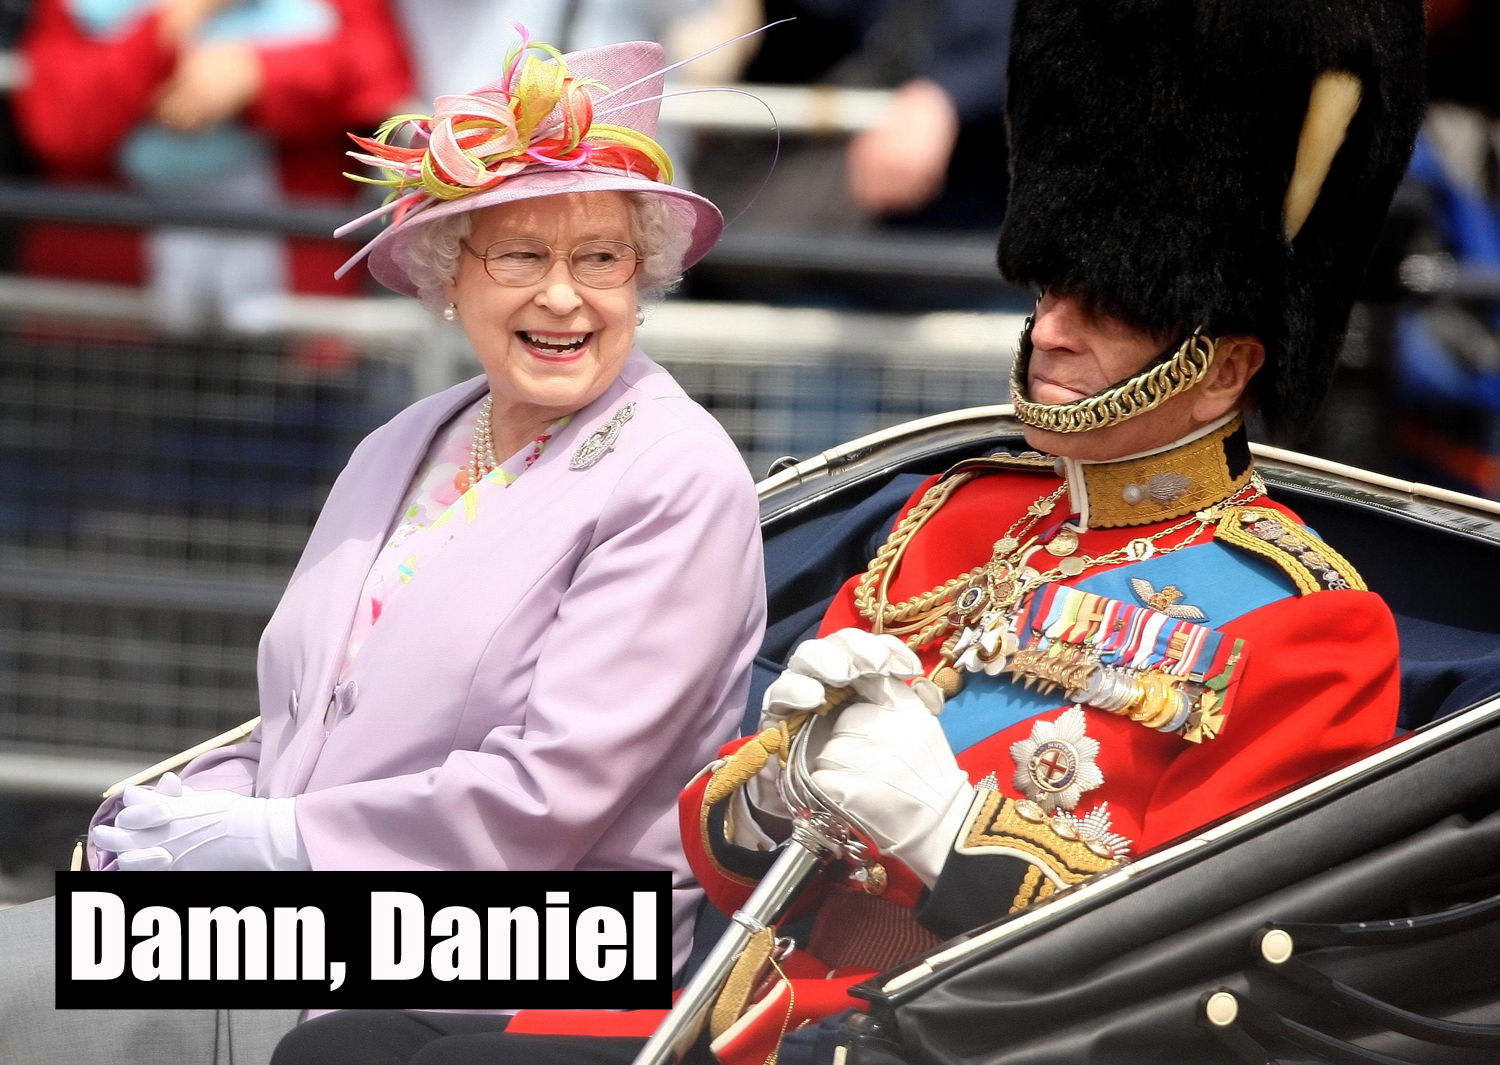 The Duke of Edinburgh and the Queen look happy (Dominic Lipinski/PA)